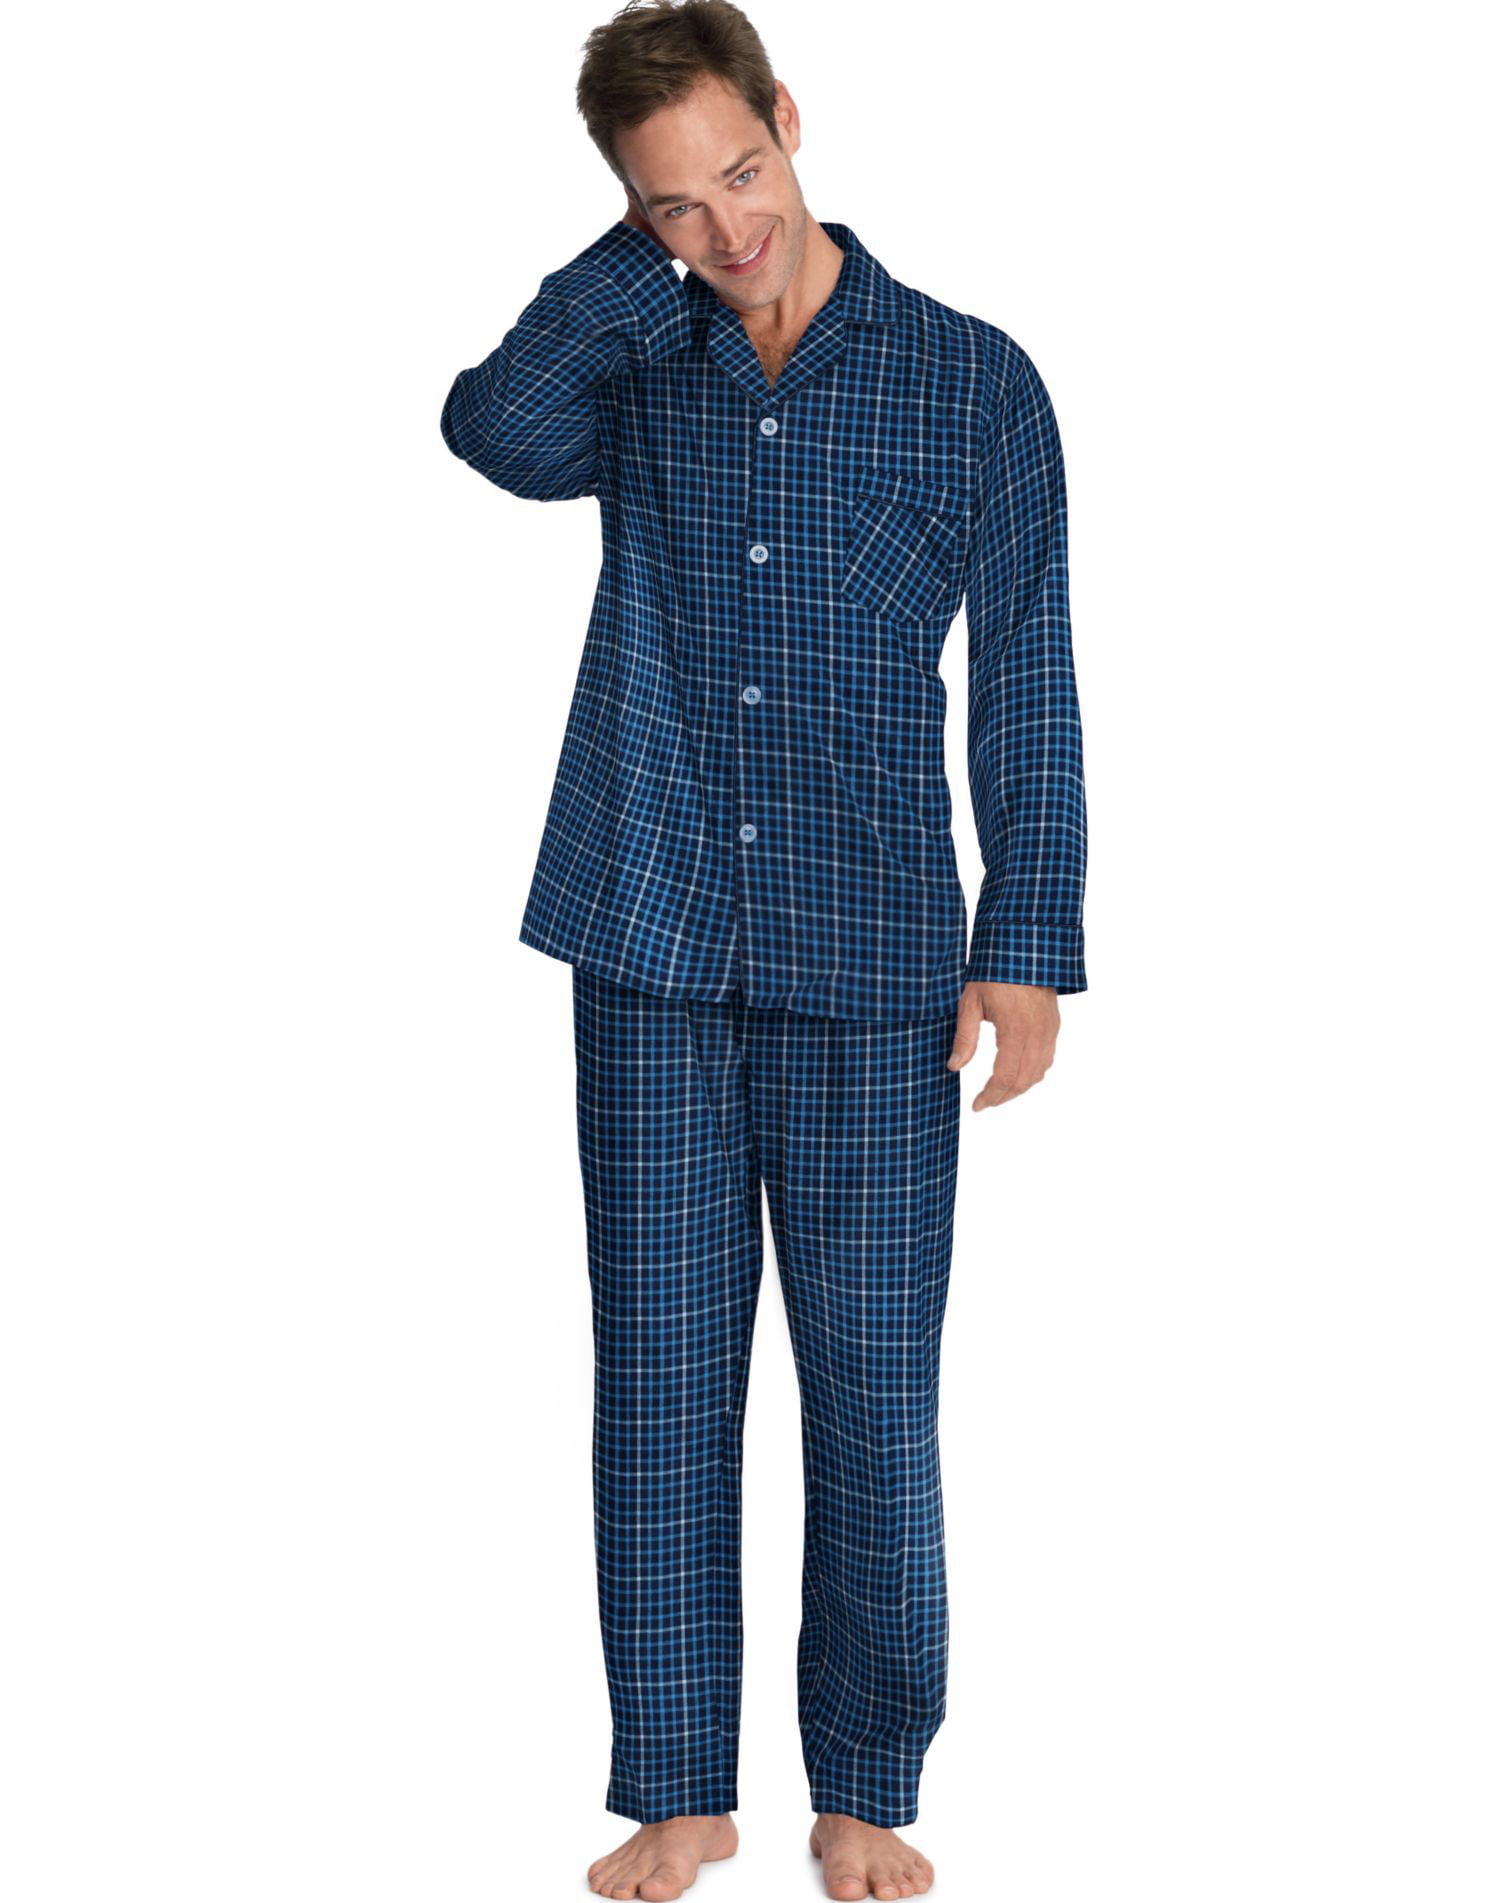 Hanes Ultimate Men's Pajama Set Big & Tall Broadcloth Blue Size 3XL NEW $60 